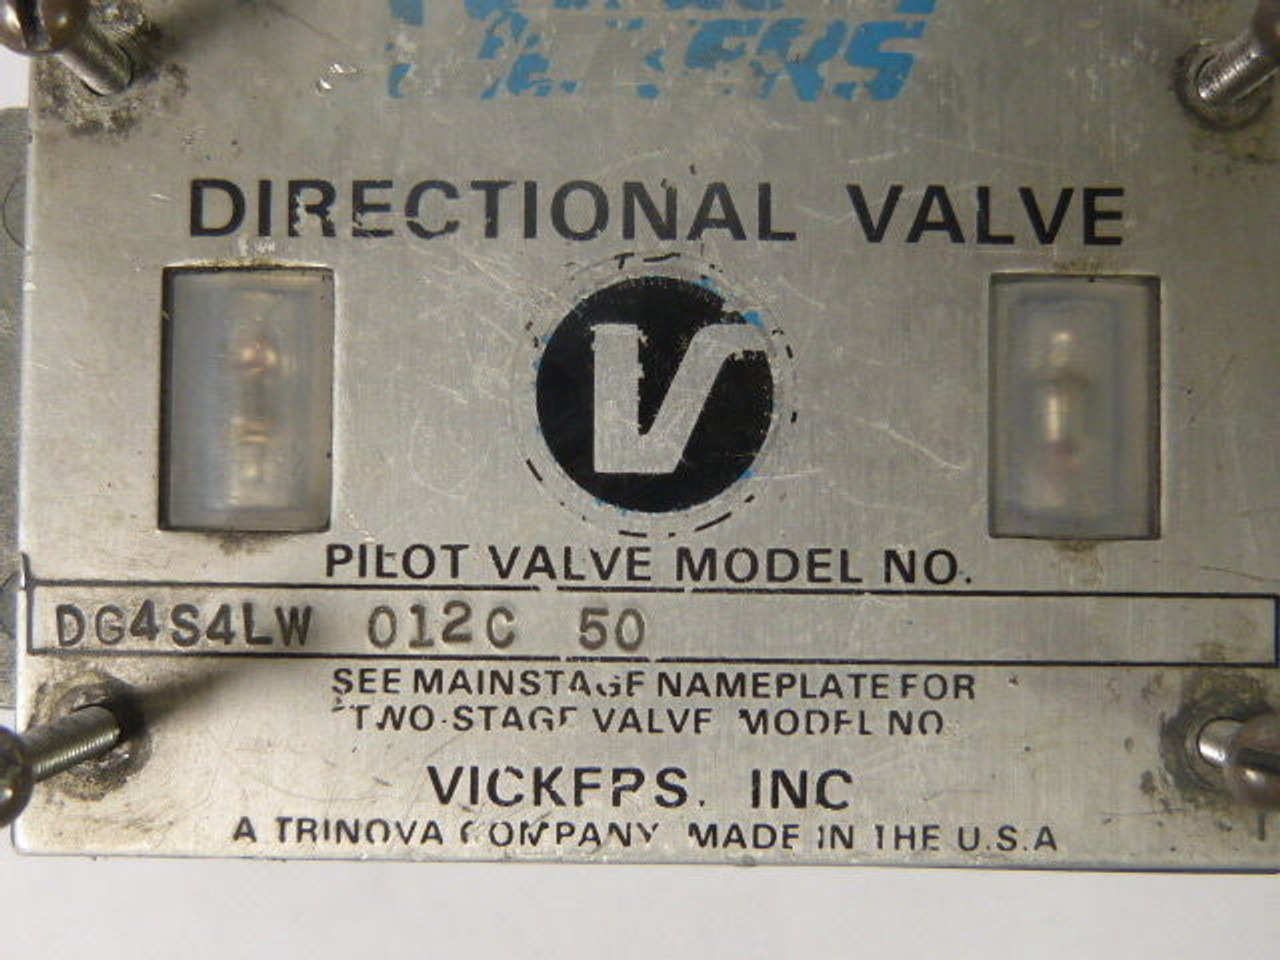 Vickers DG4S4LW-012C-50 Directional Pilot Valve USED